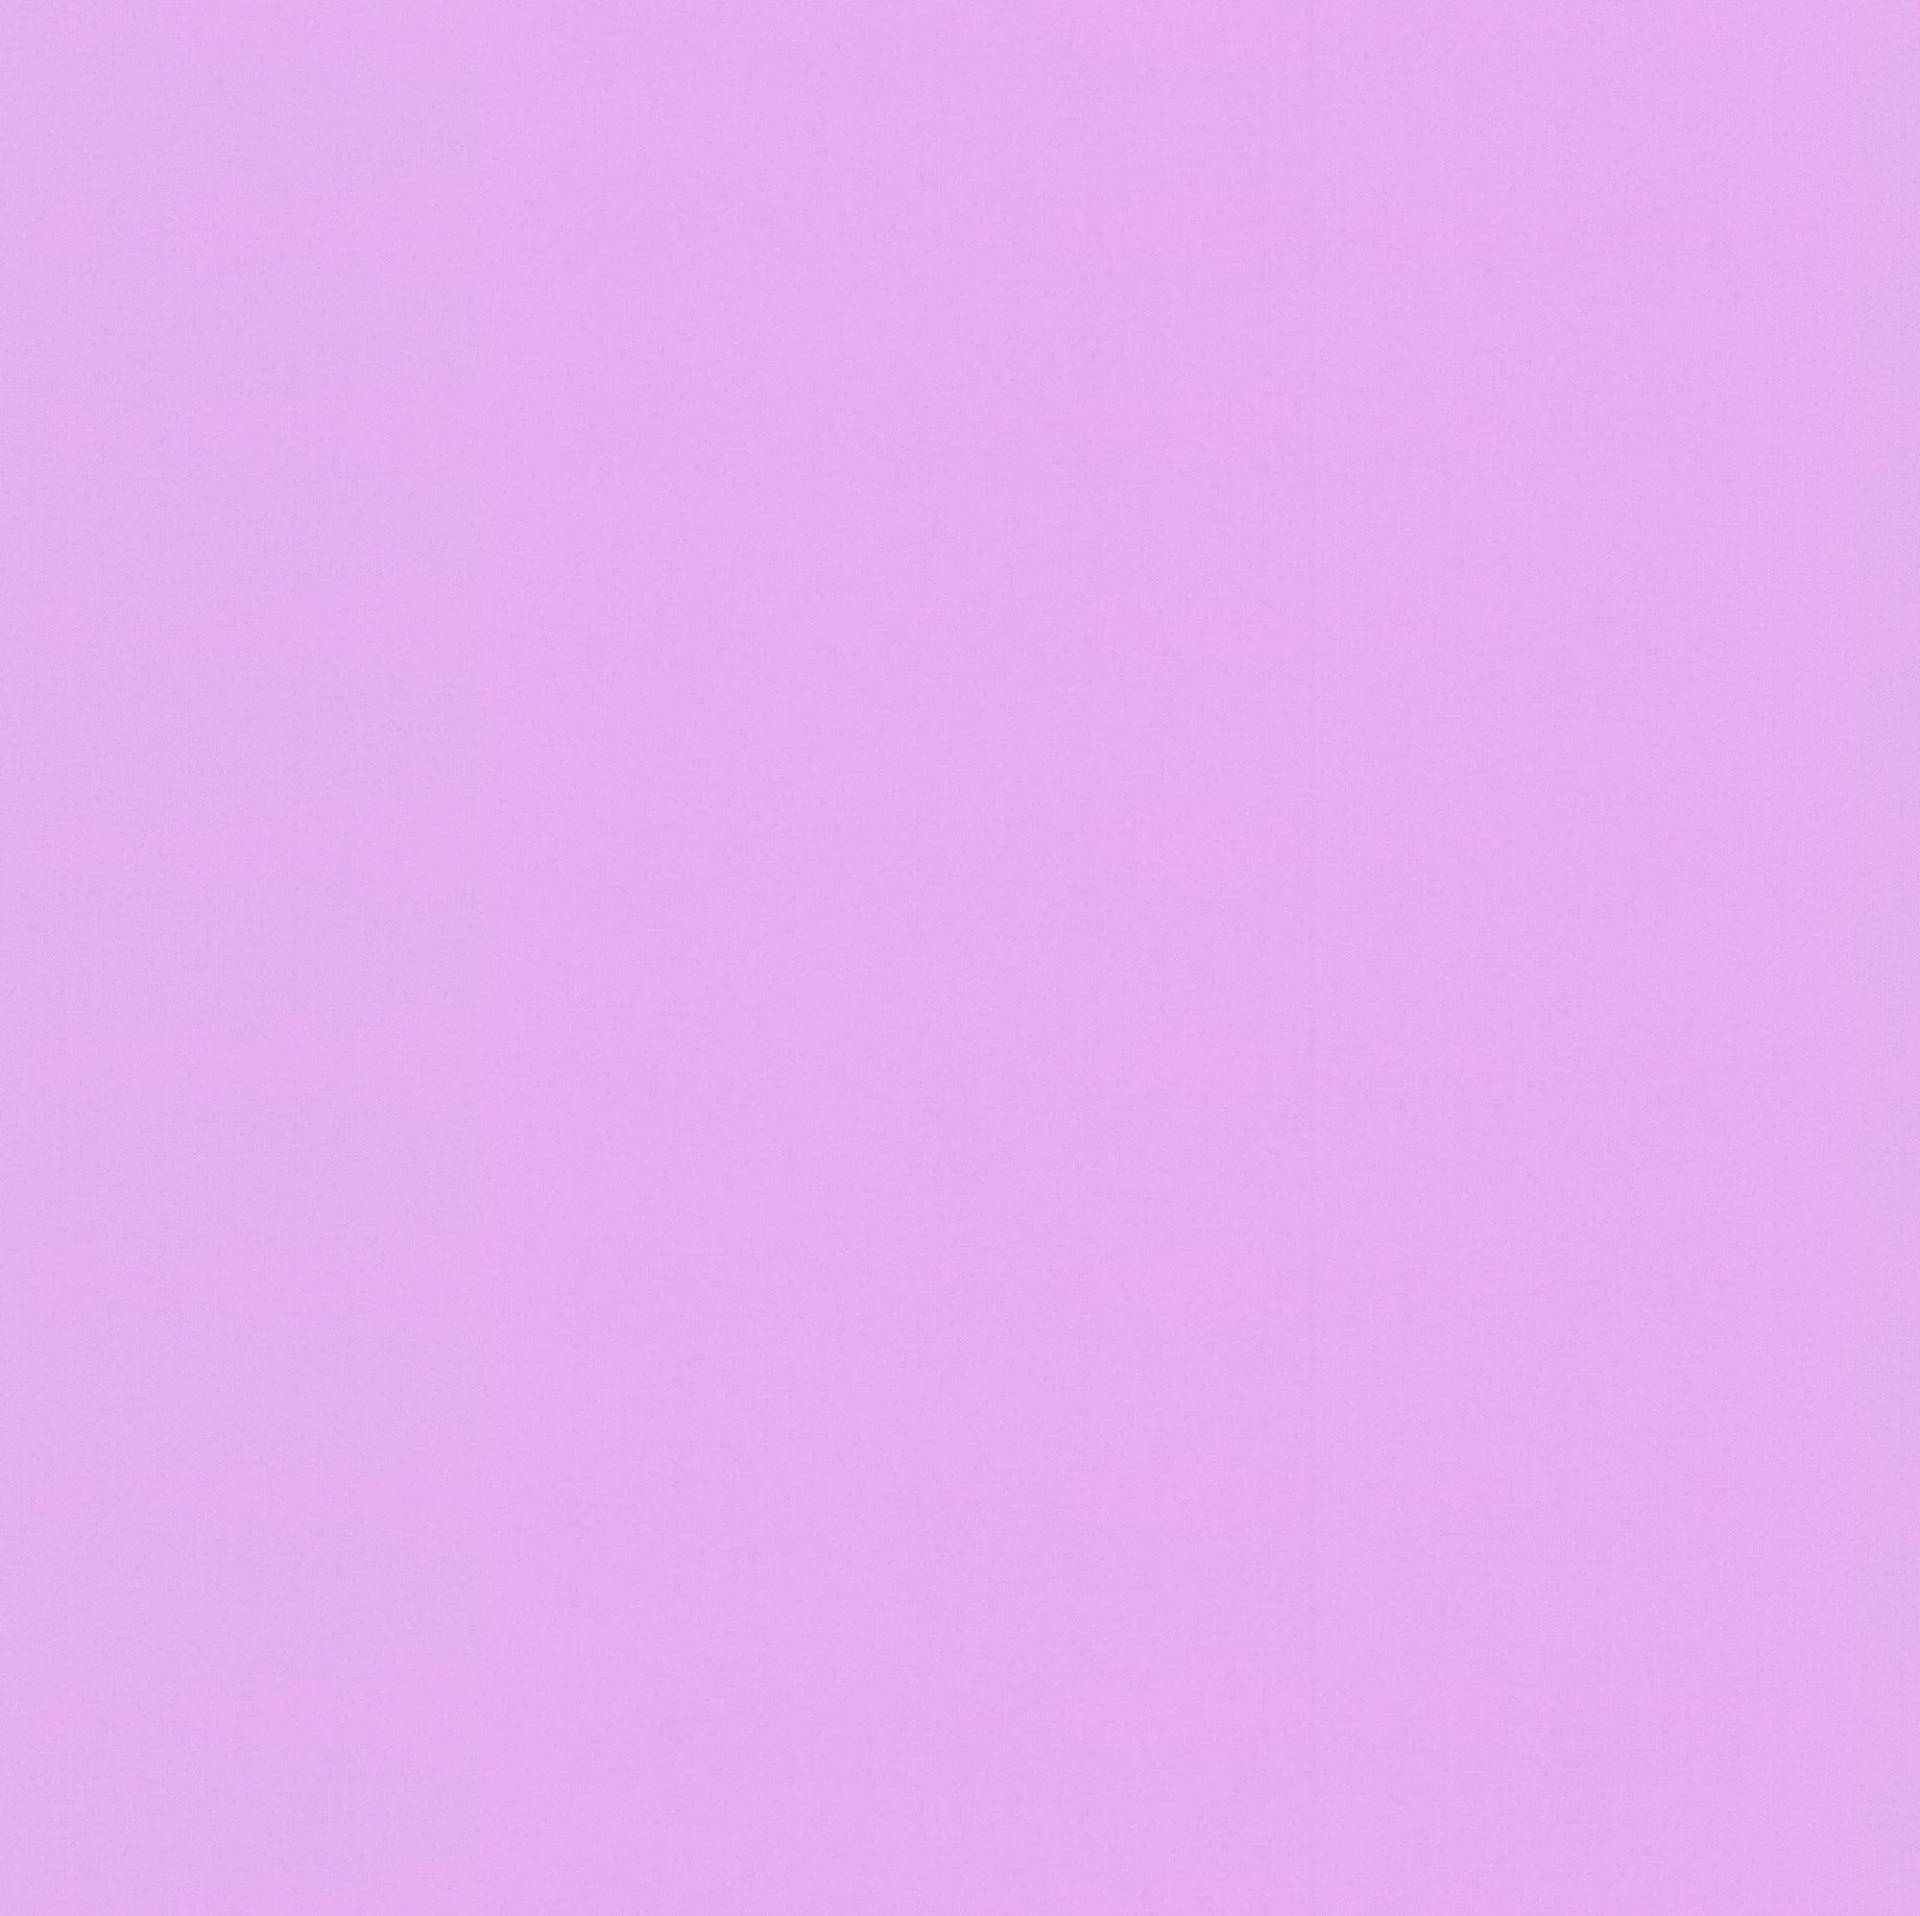 Pinkish Plain Lilla Wallpaper